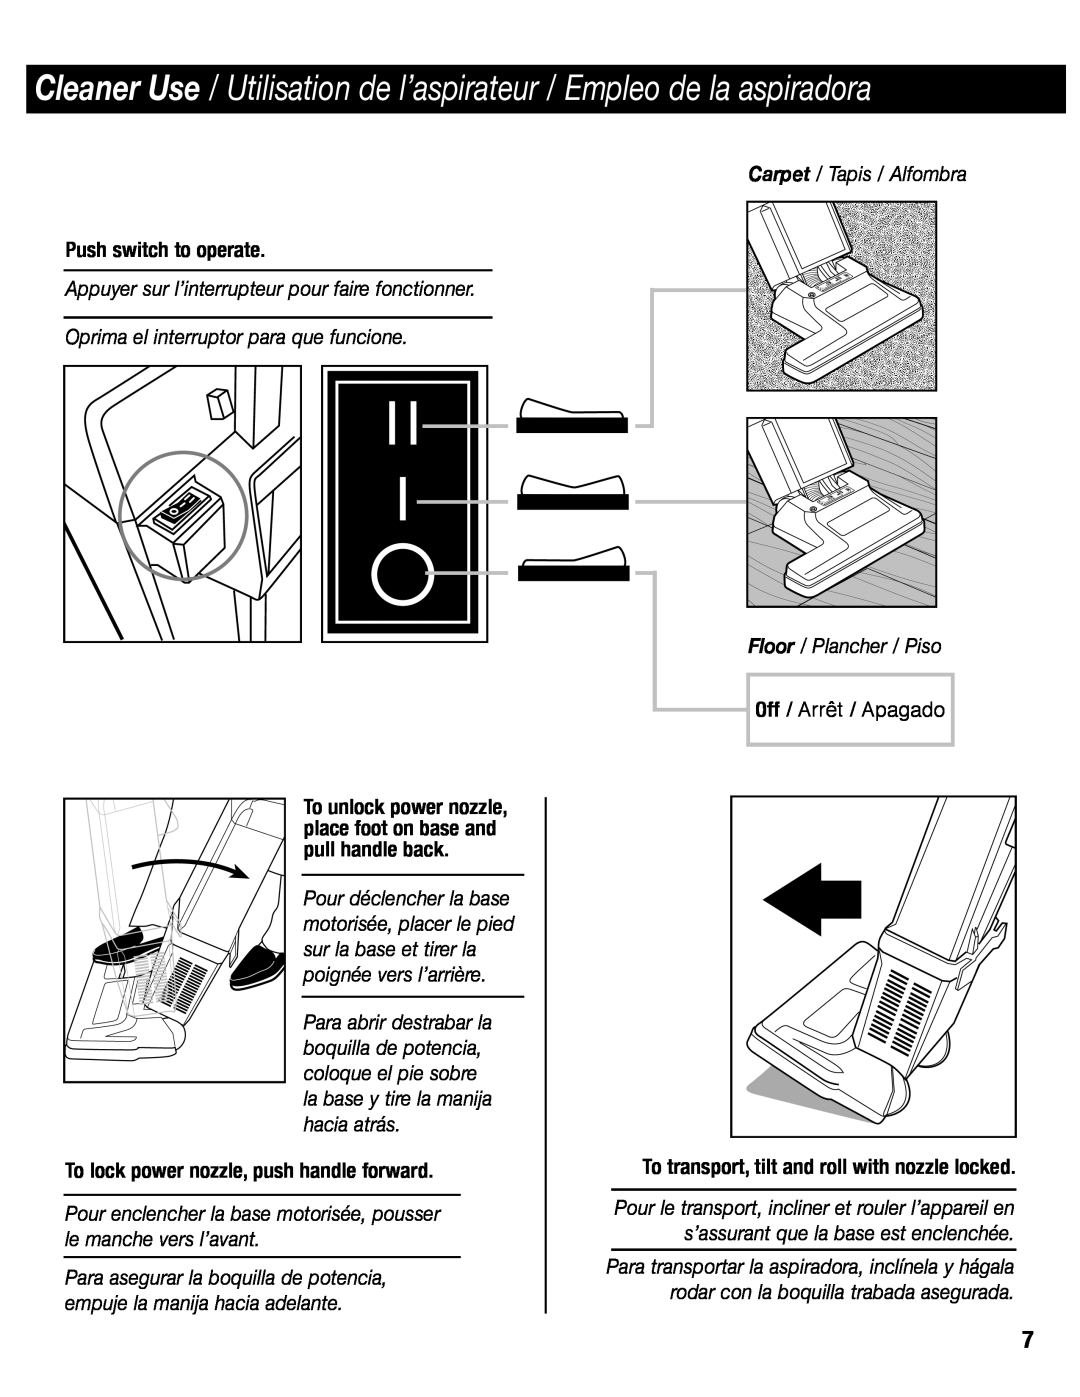 Sanitaire SC6600 manual Cleaner Use / Utilisation de l’aspirateur / Empleo de la aspiradora, Carpet / Tapis / Alfombra 